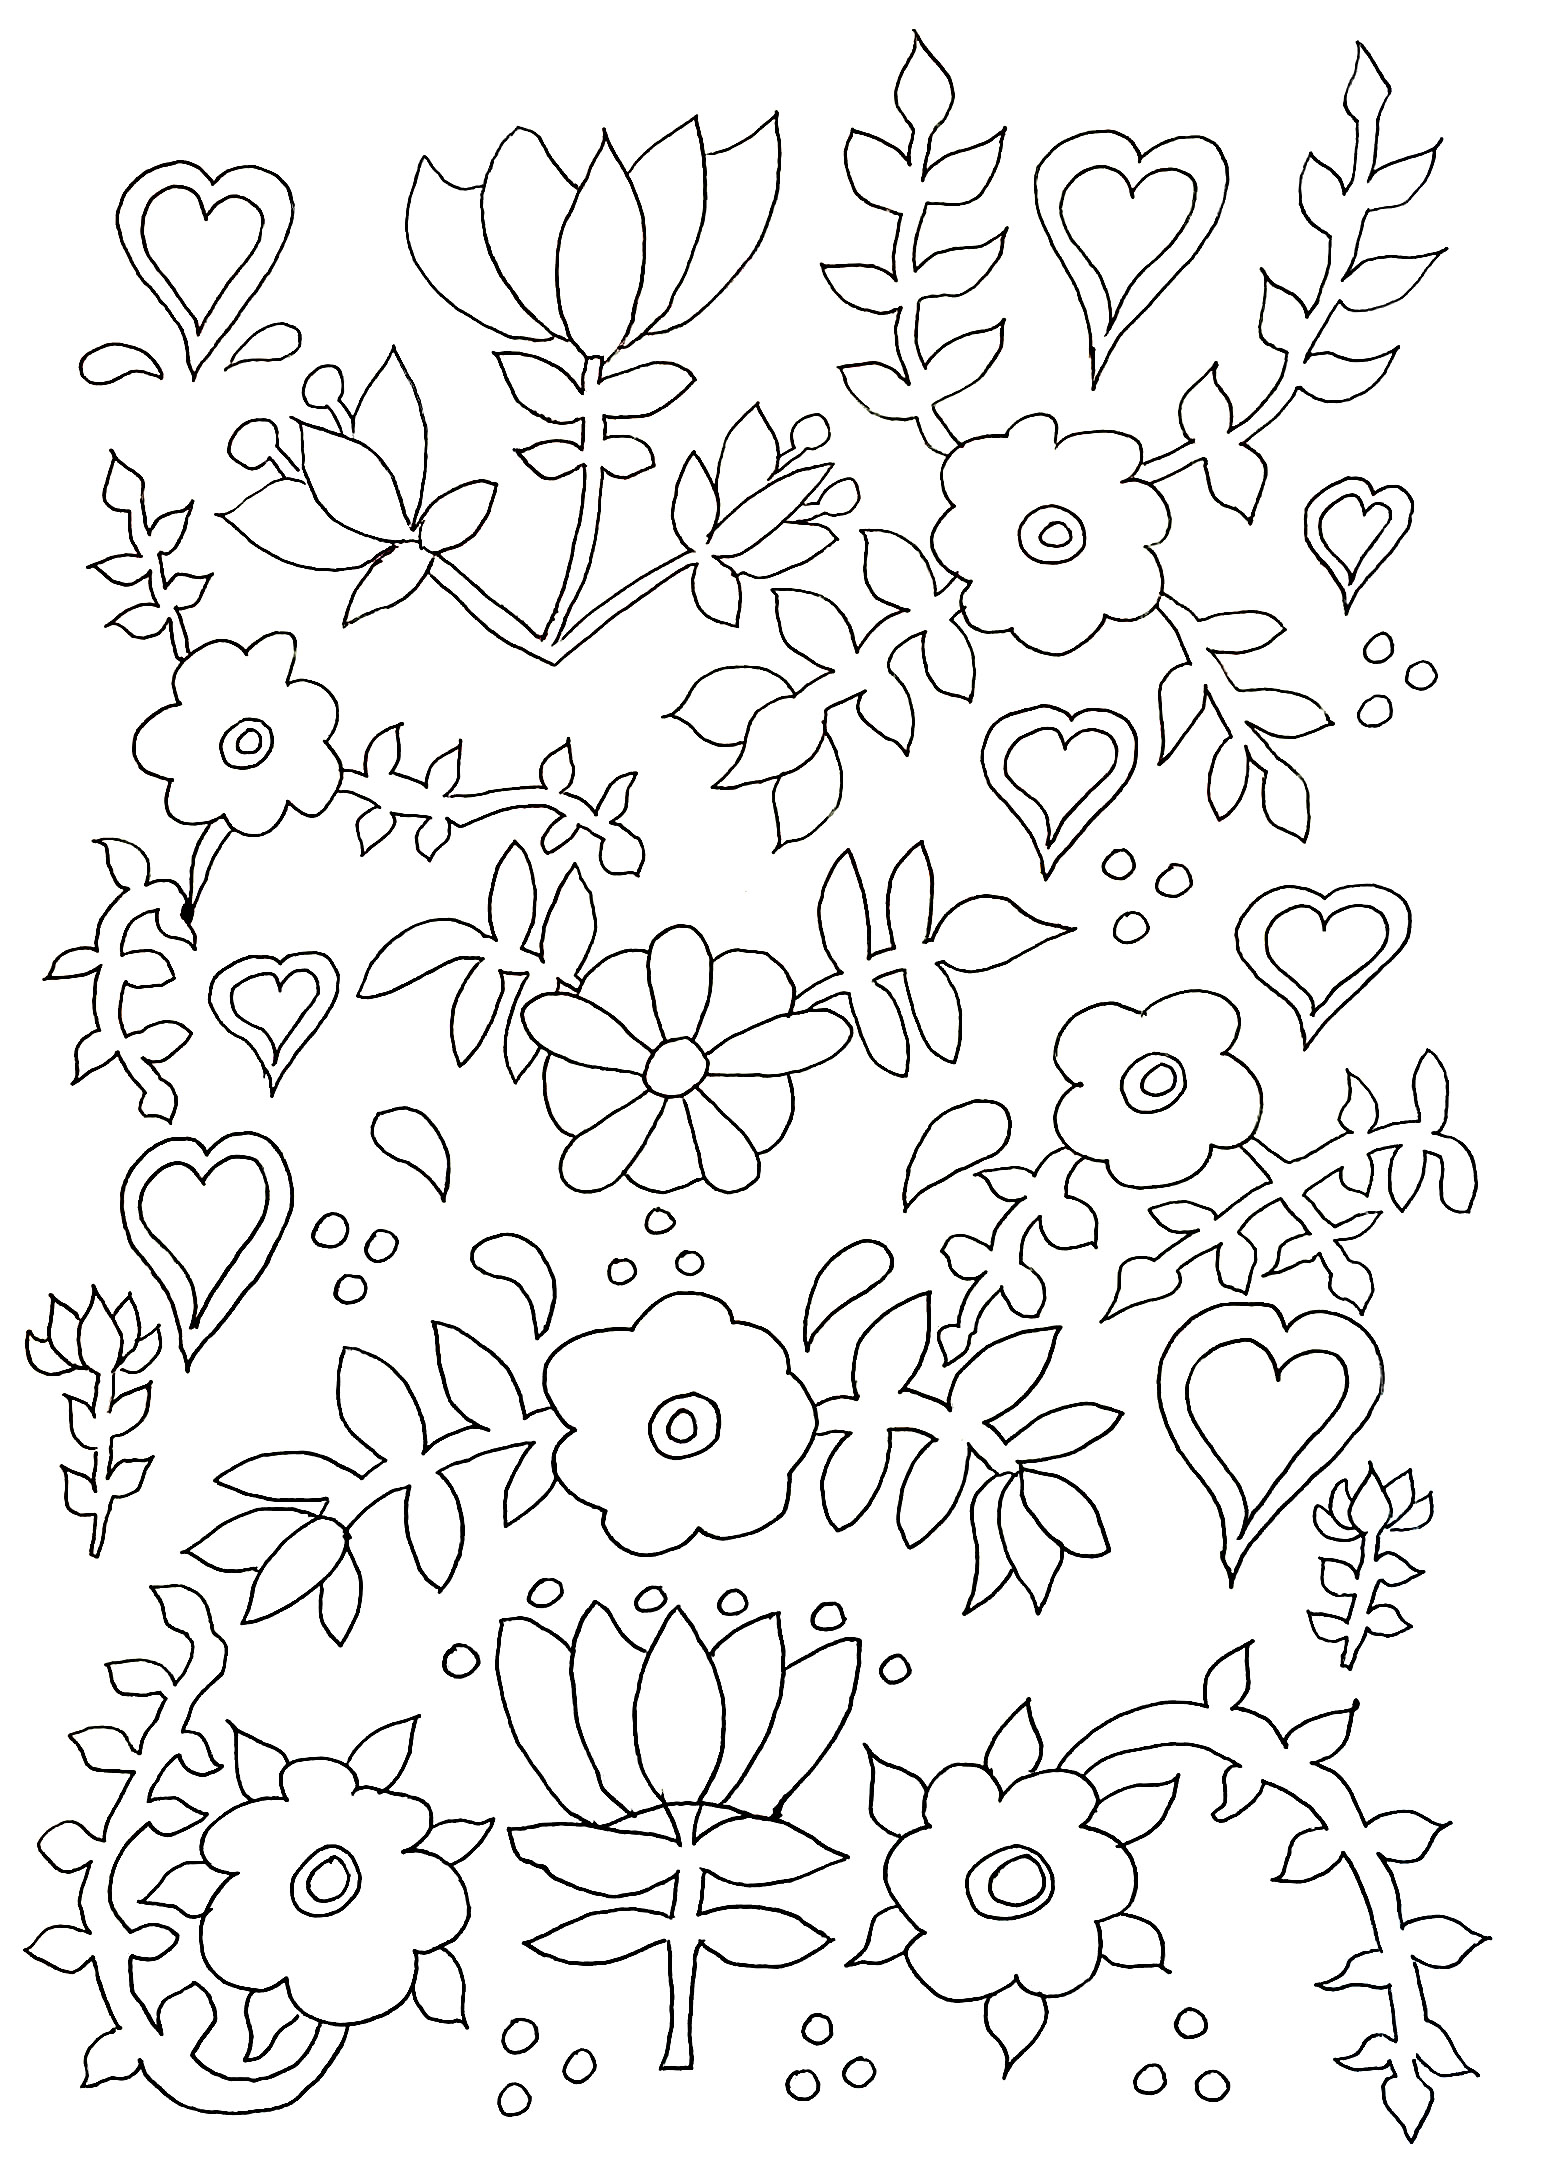 Dibujo de Flores para descargar e imprimir para niños